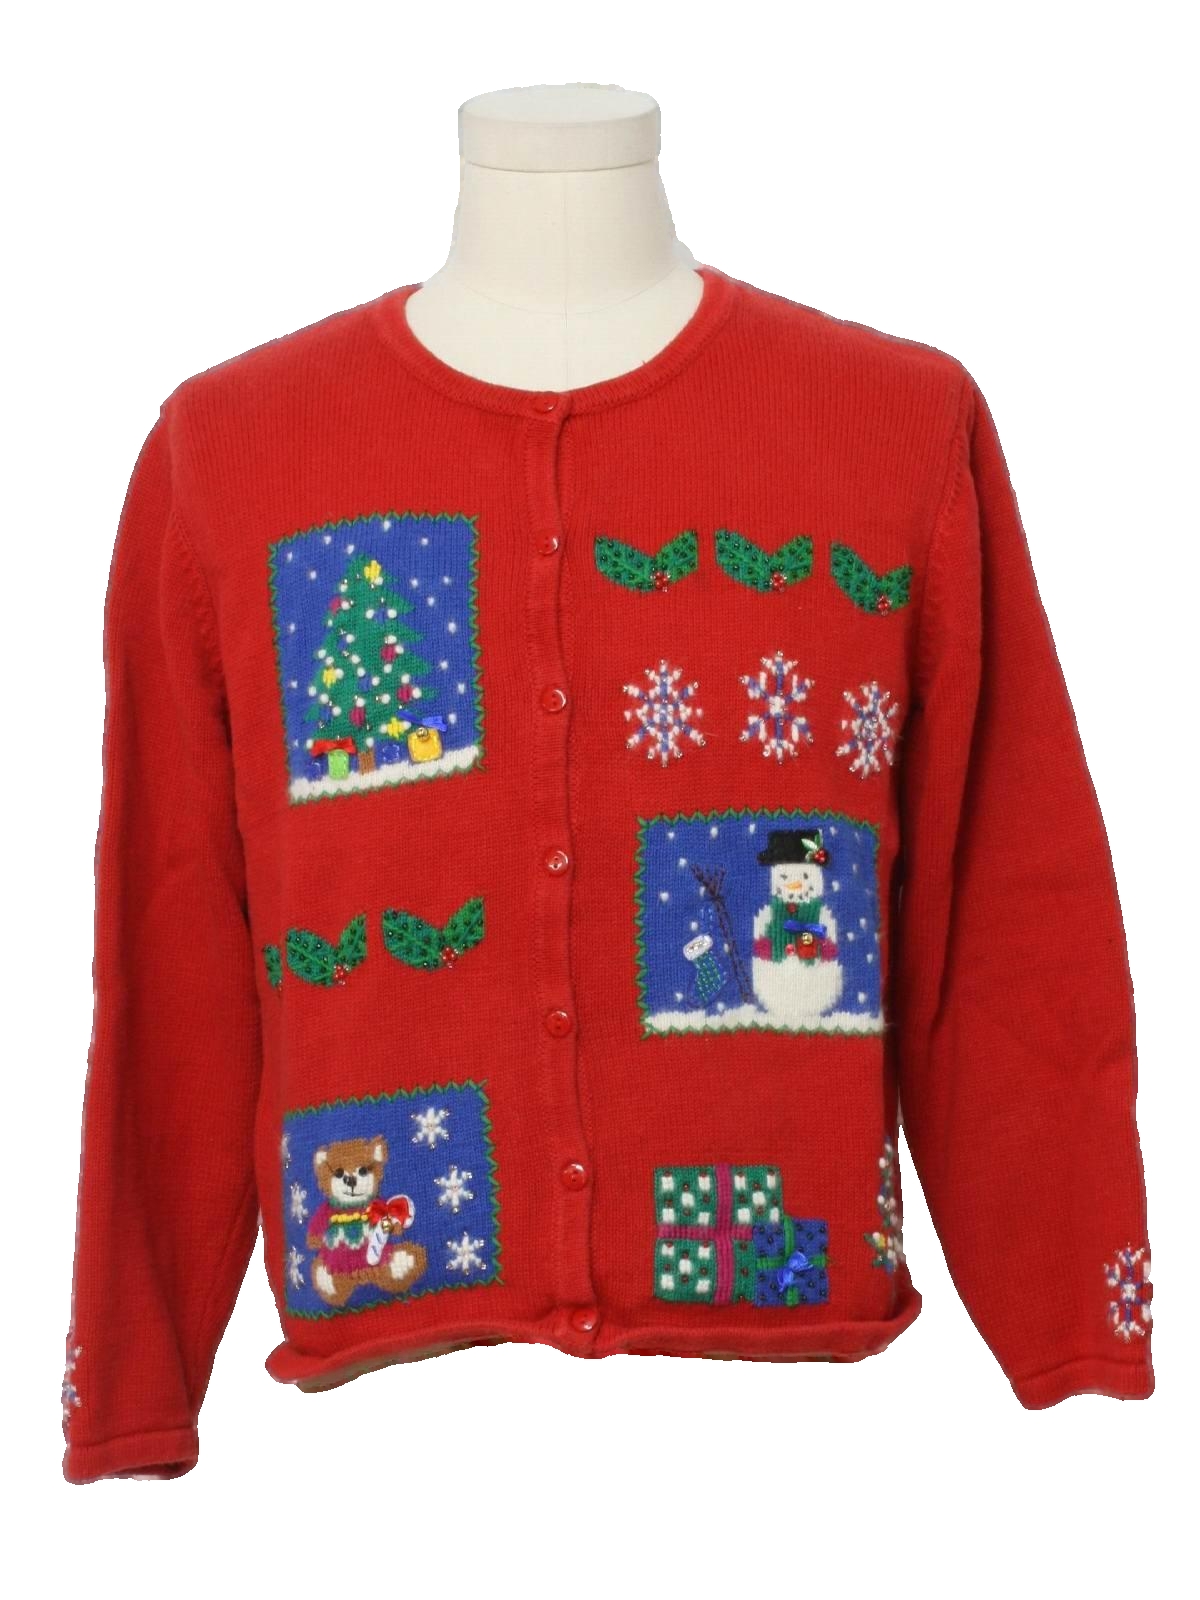 Womens Ugly Christmas Sweater: -Classics by Marisa Christina- Womens ...